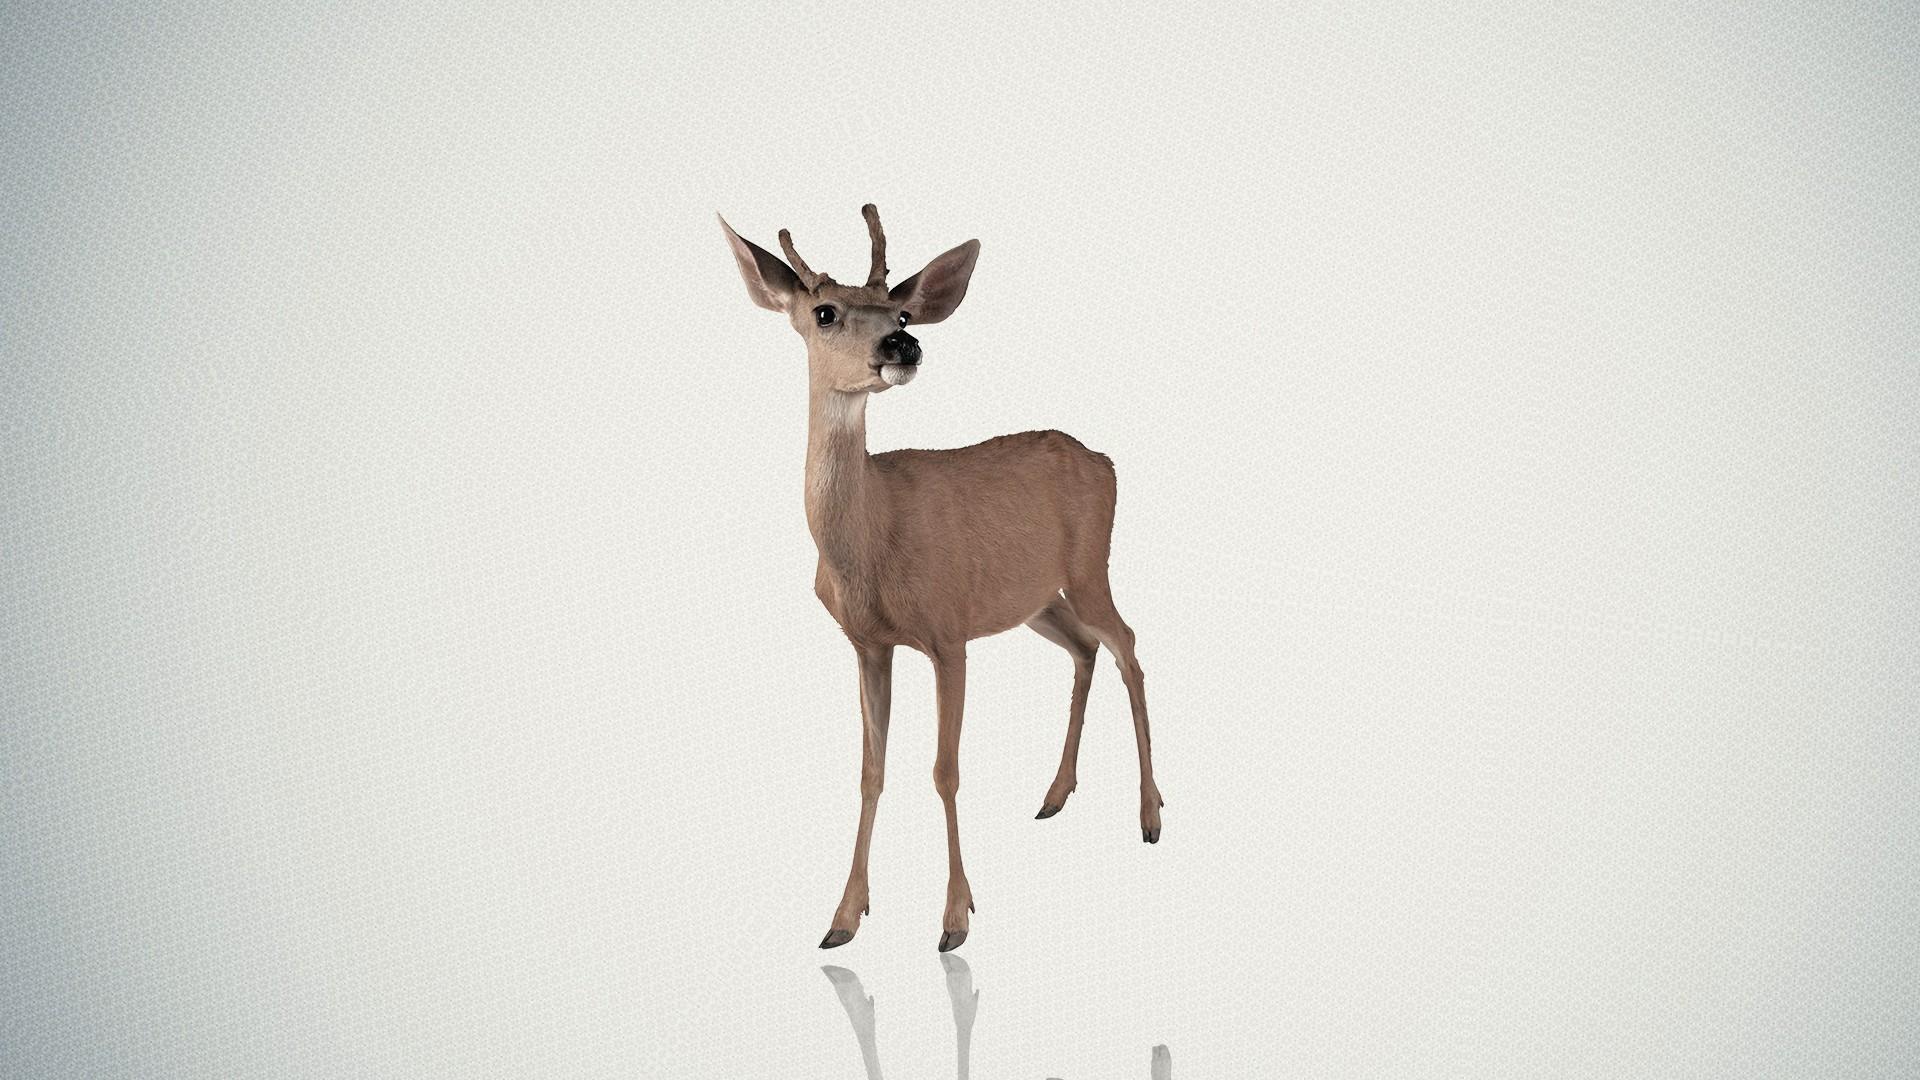 Deer Wallpaper HD Background, Image, Pics, Photo Free Download